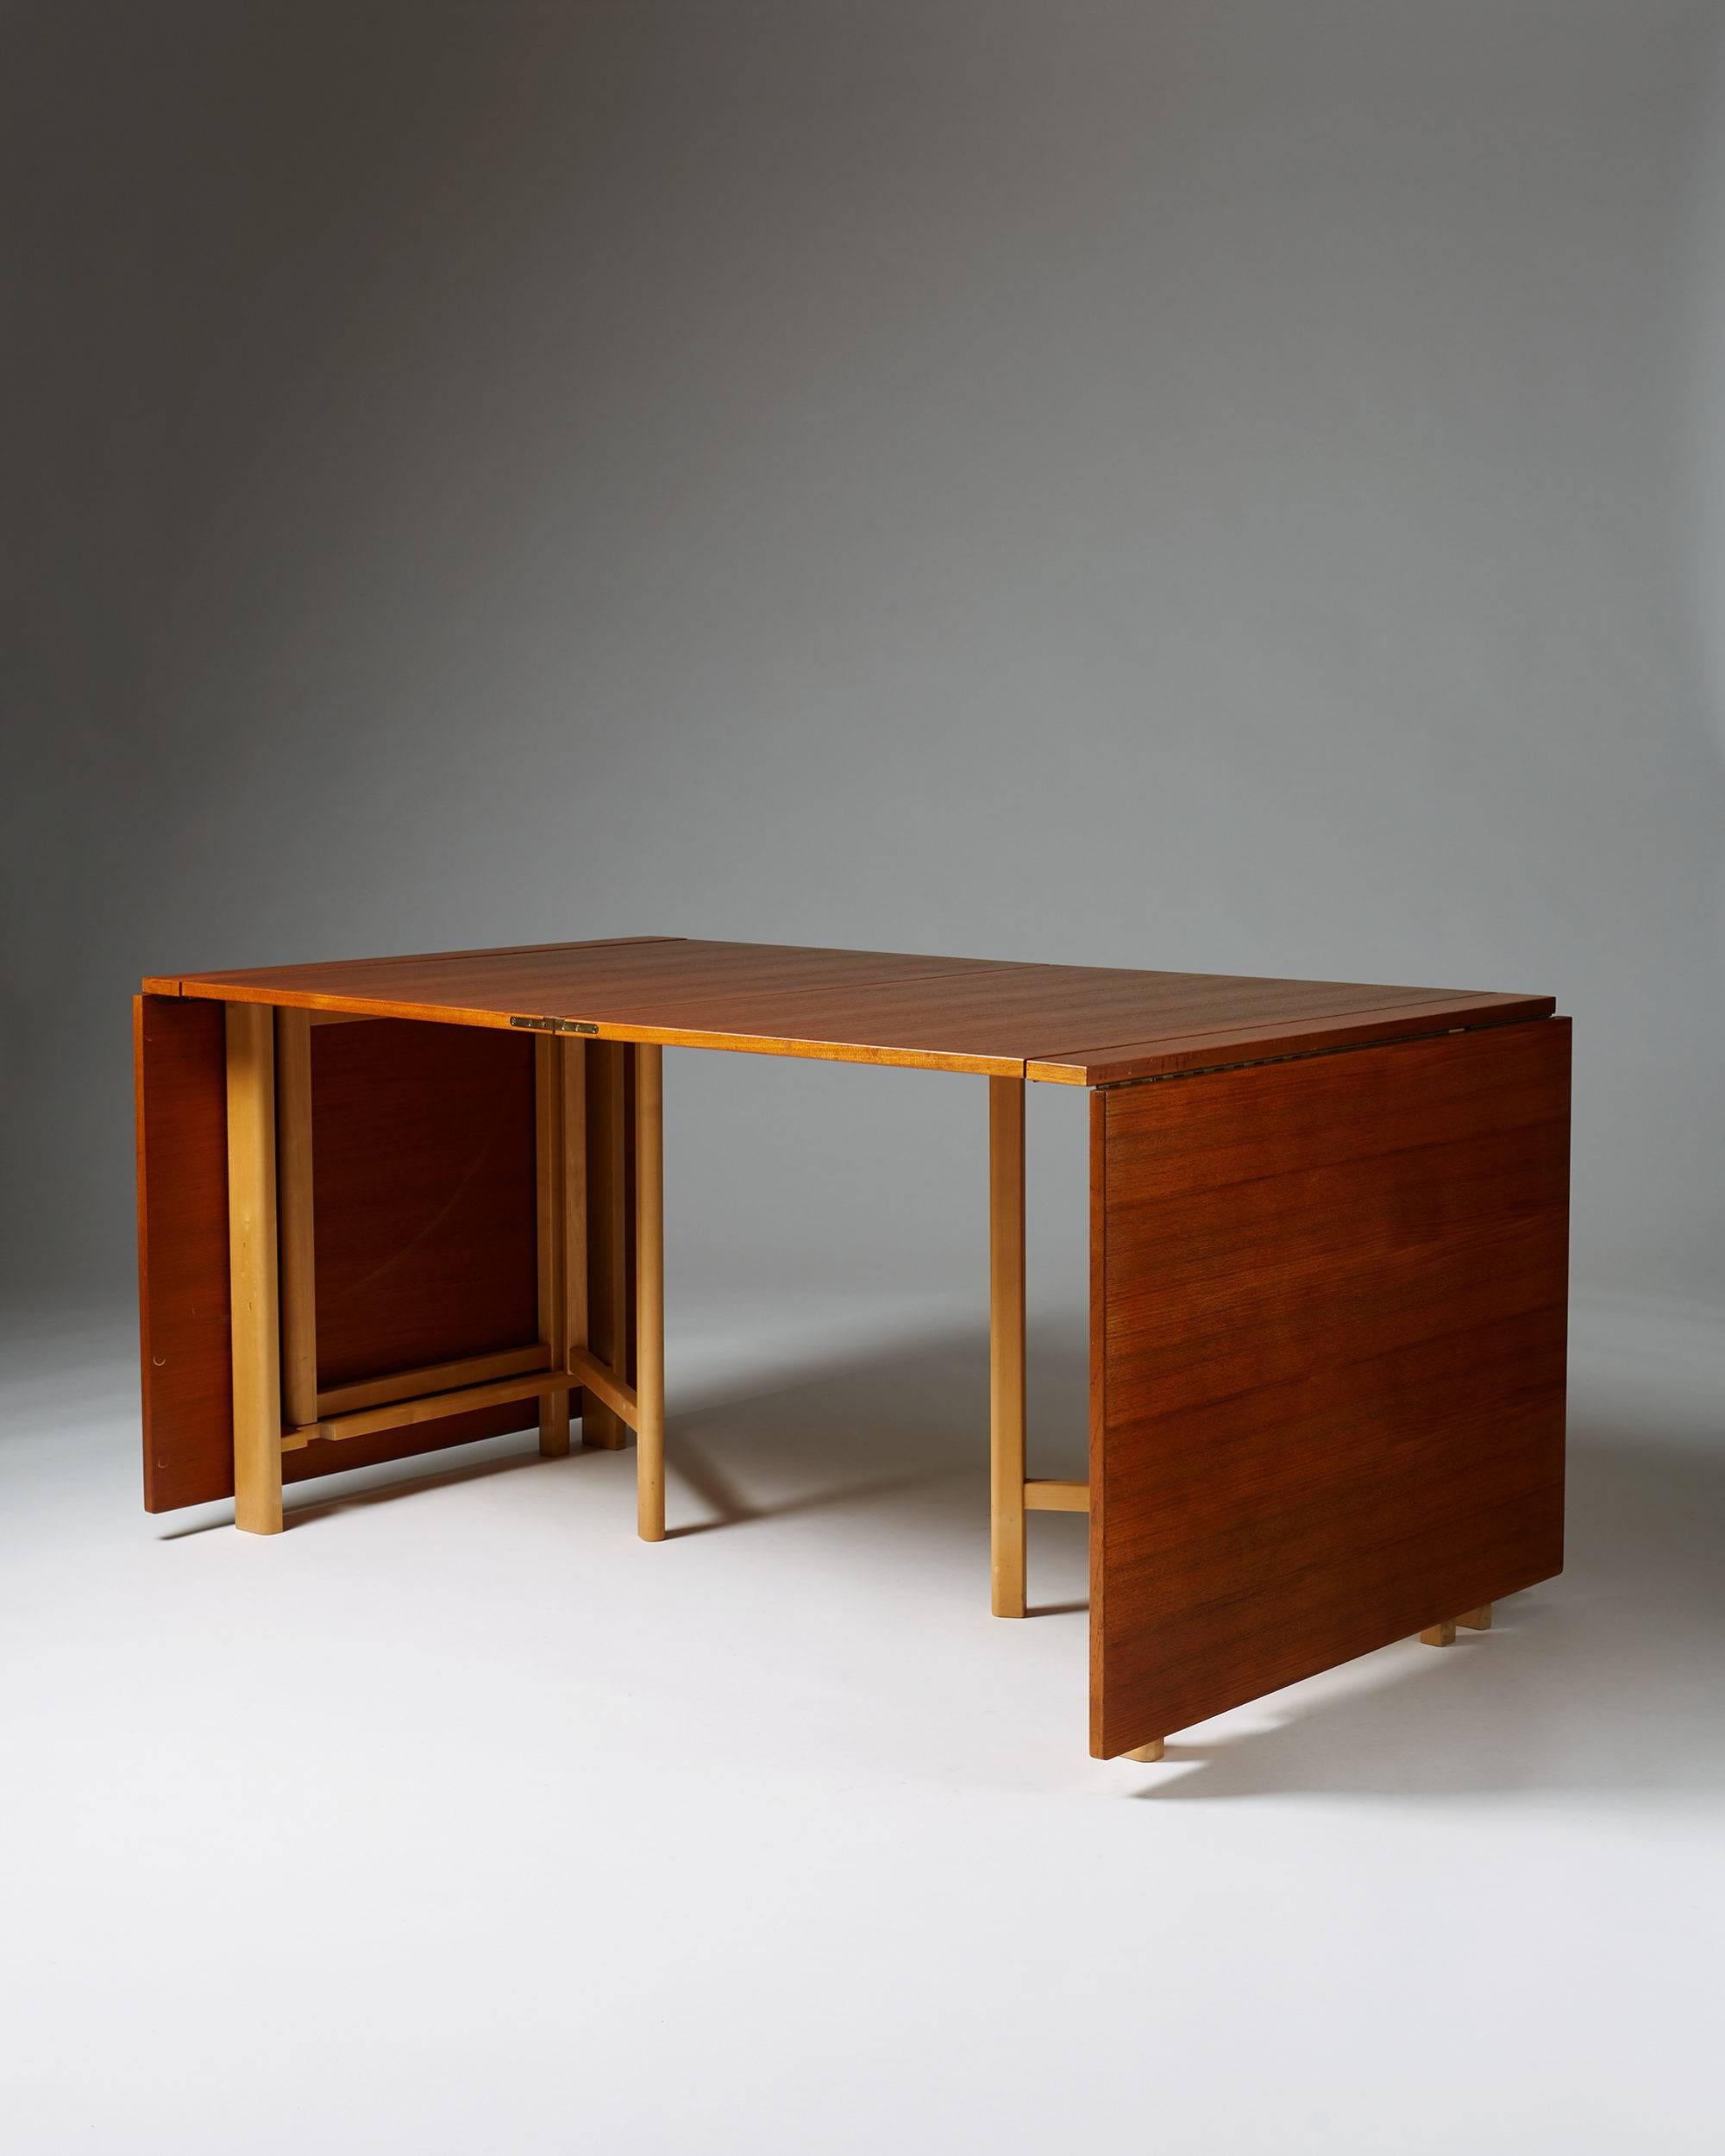 Scandinavian Modern Dining Table “Maria Flap” Designed by Bruno Mathsson, Sweden, 1965